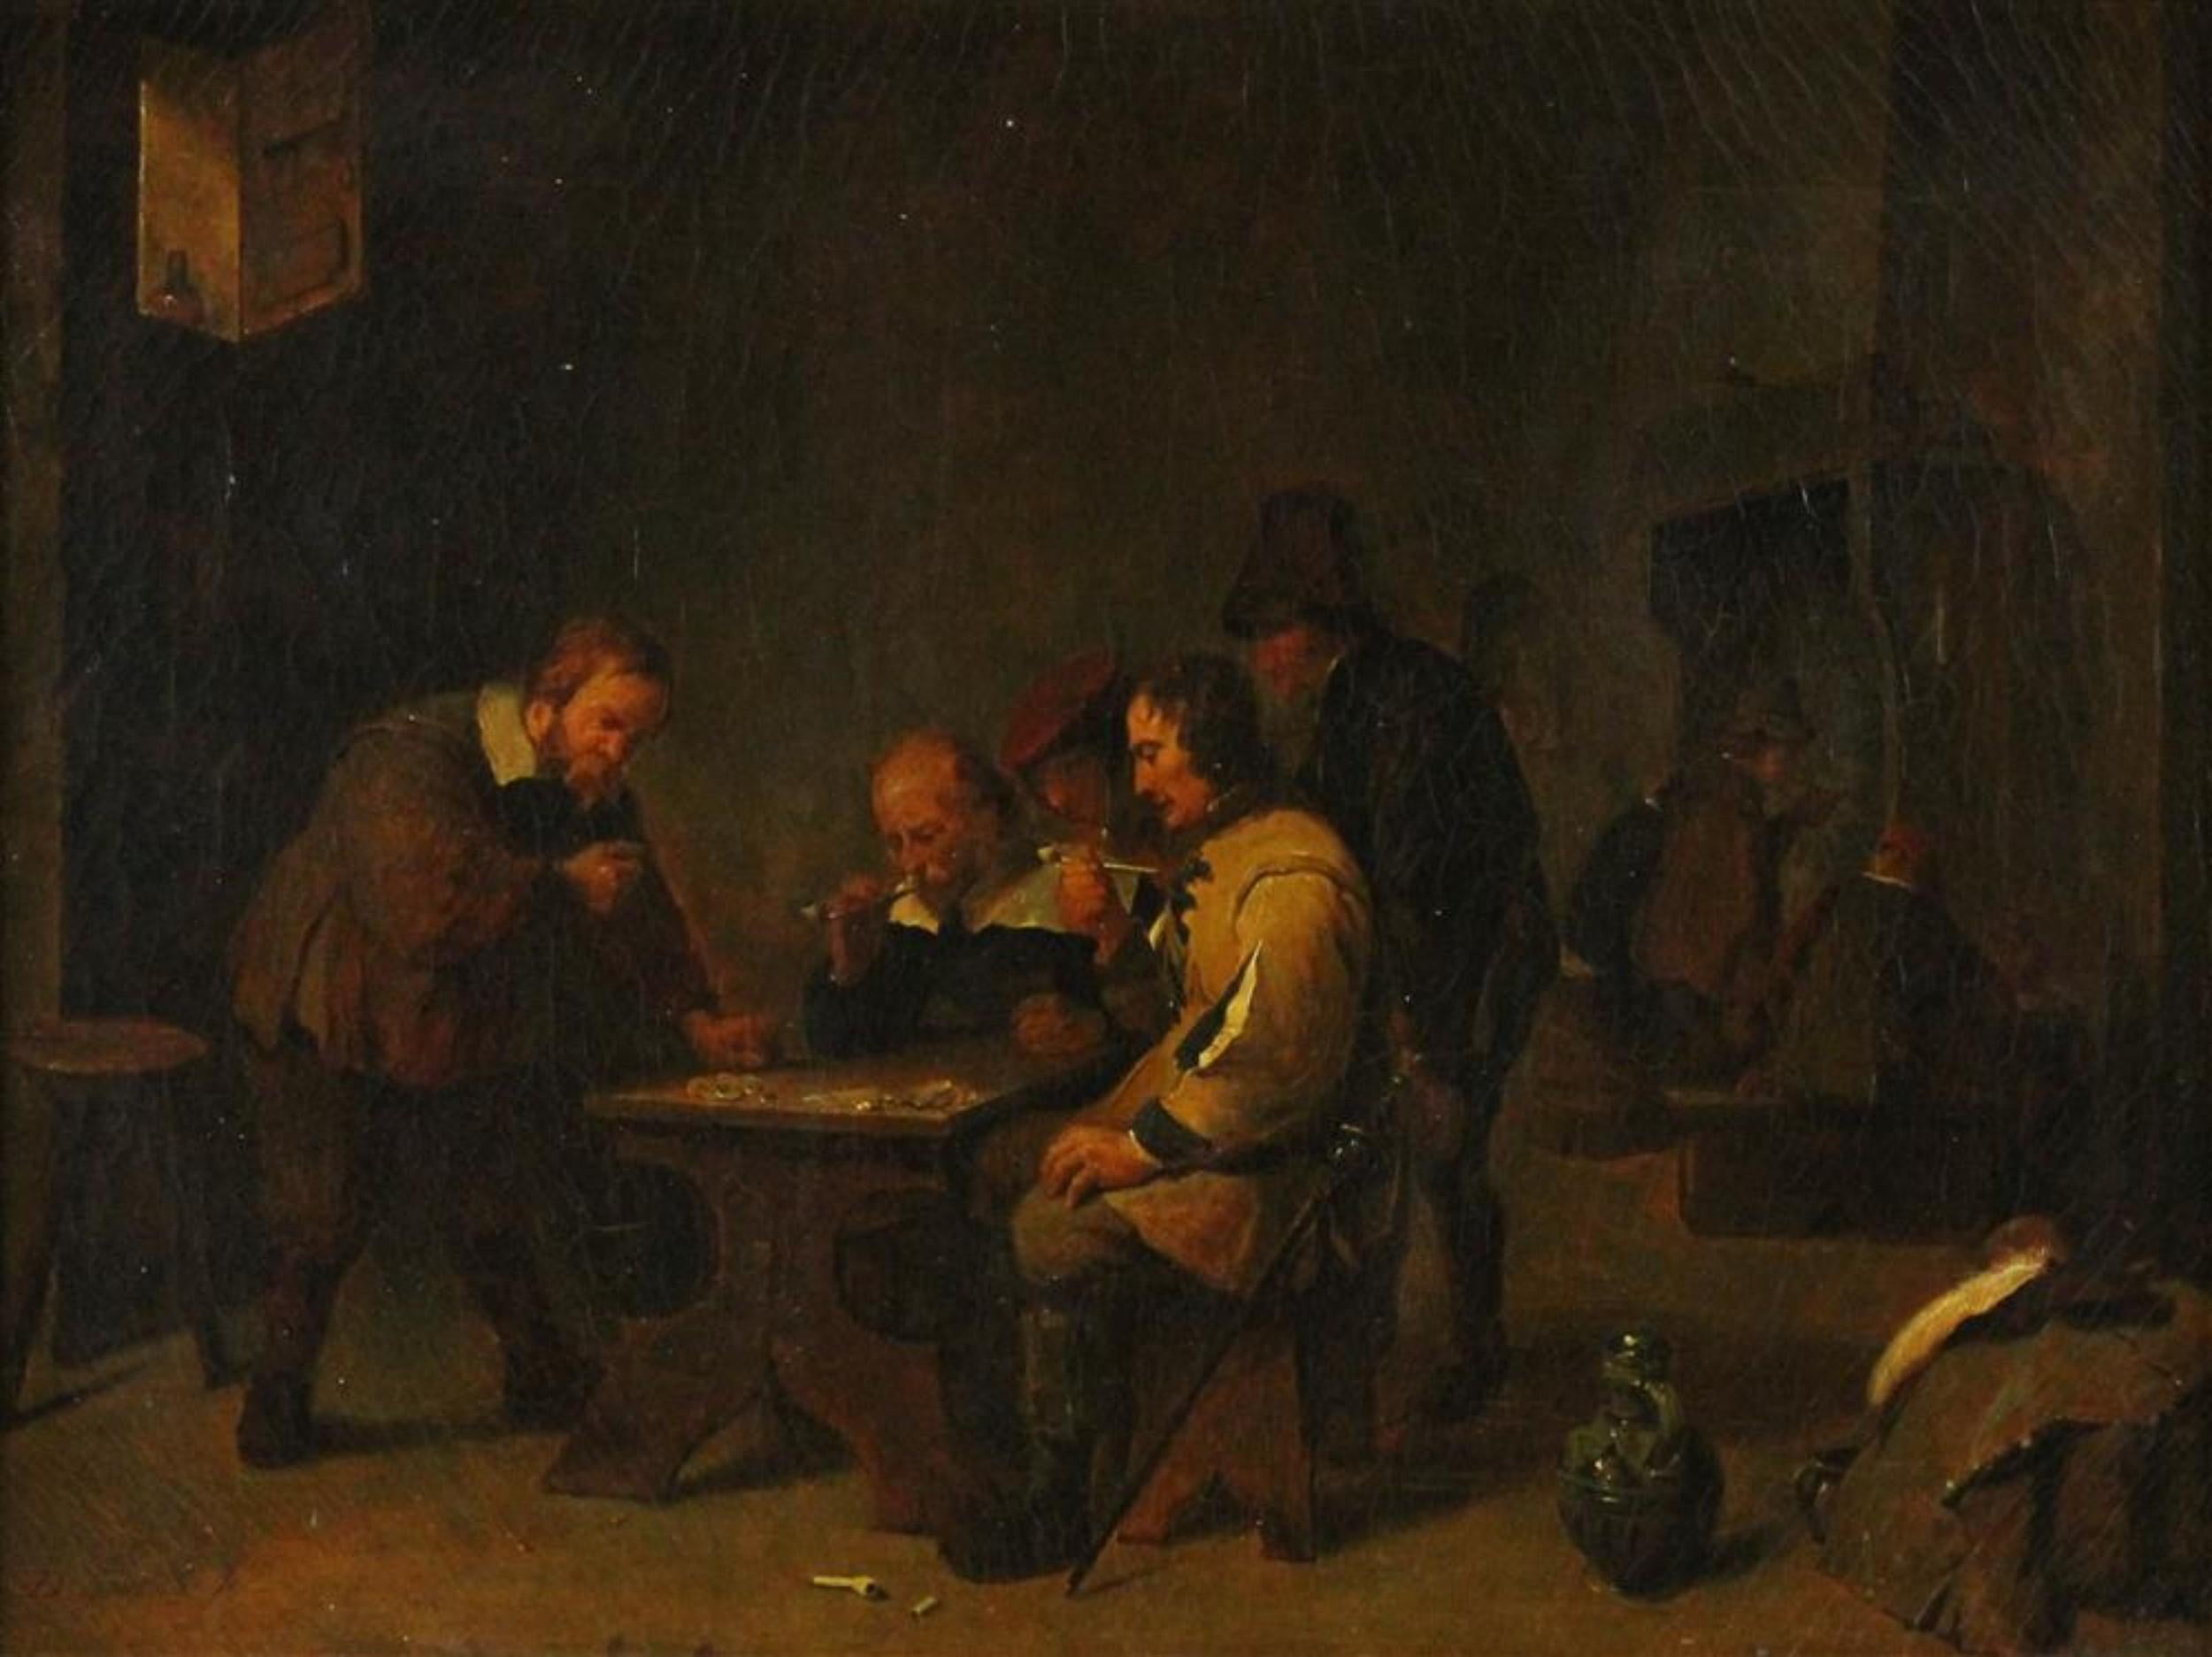 Interieur-Szene – Painting von David Teniers the Younger